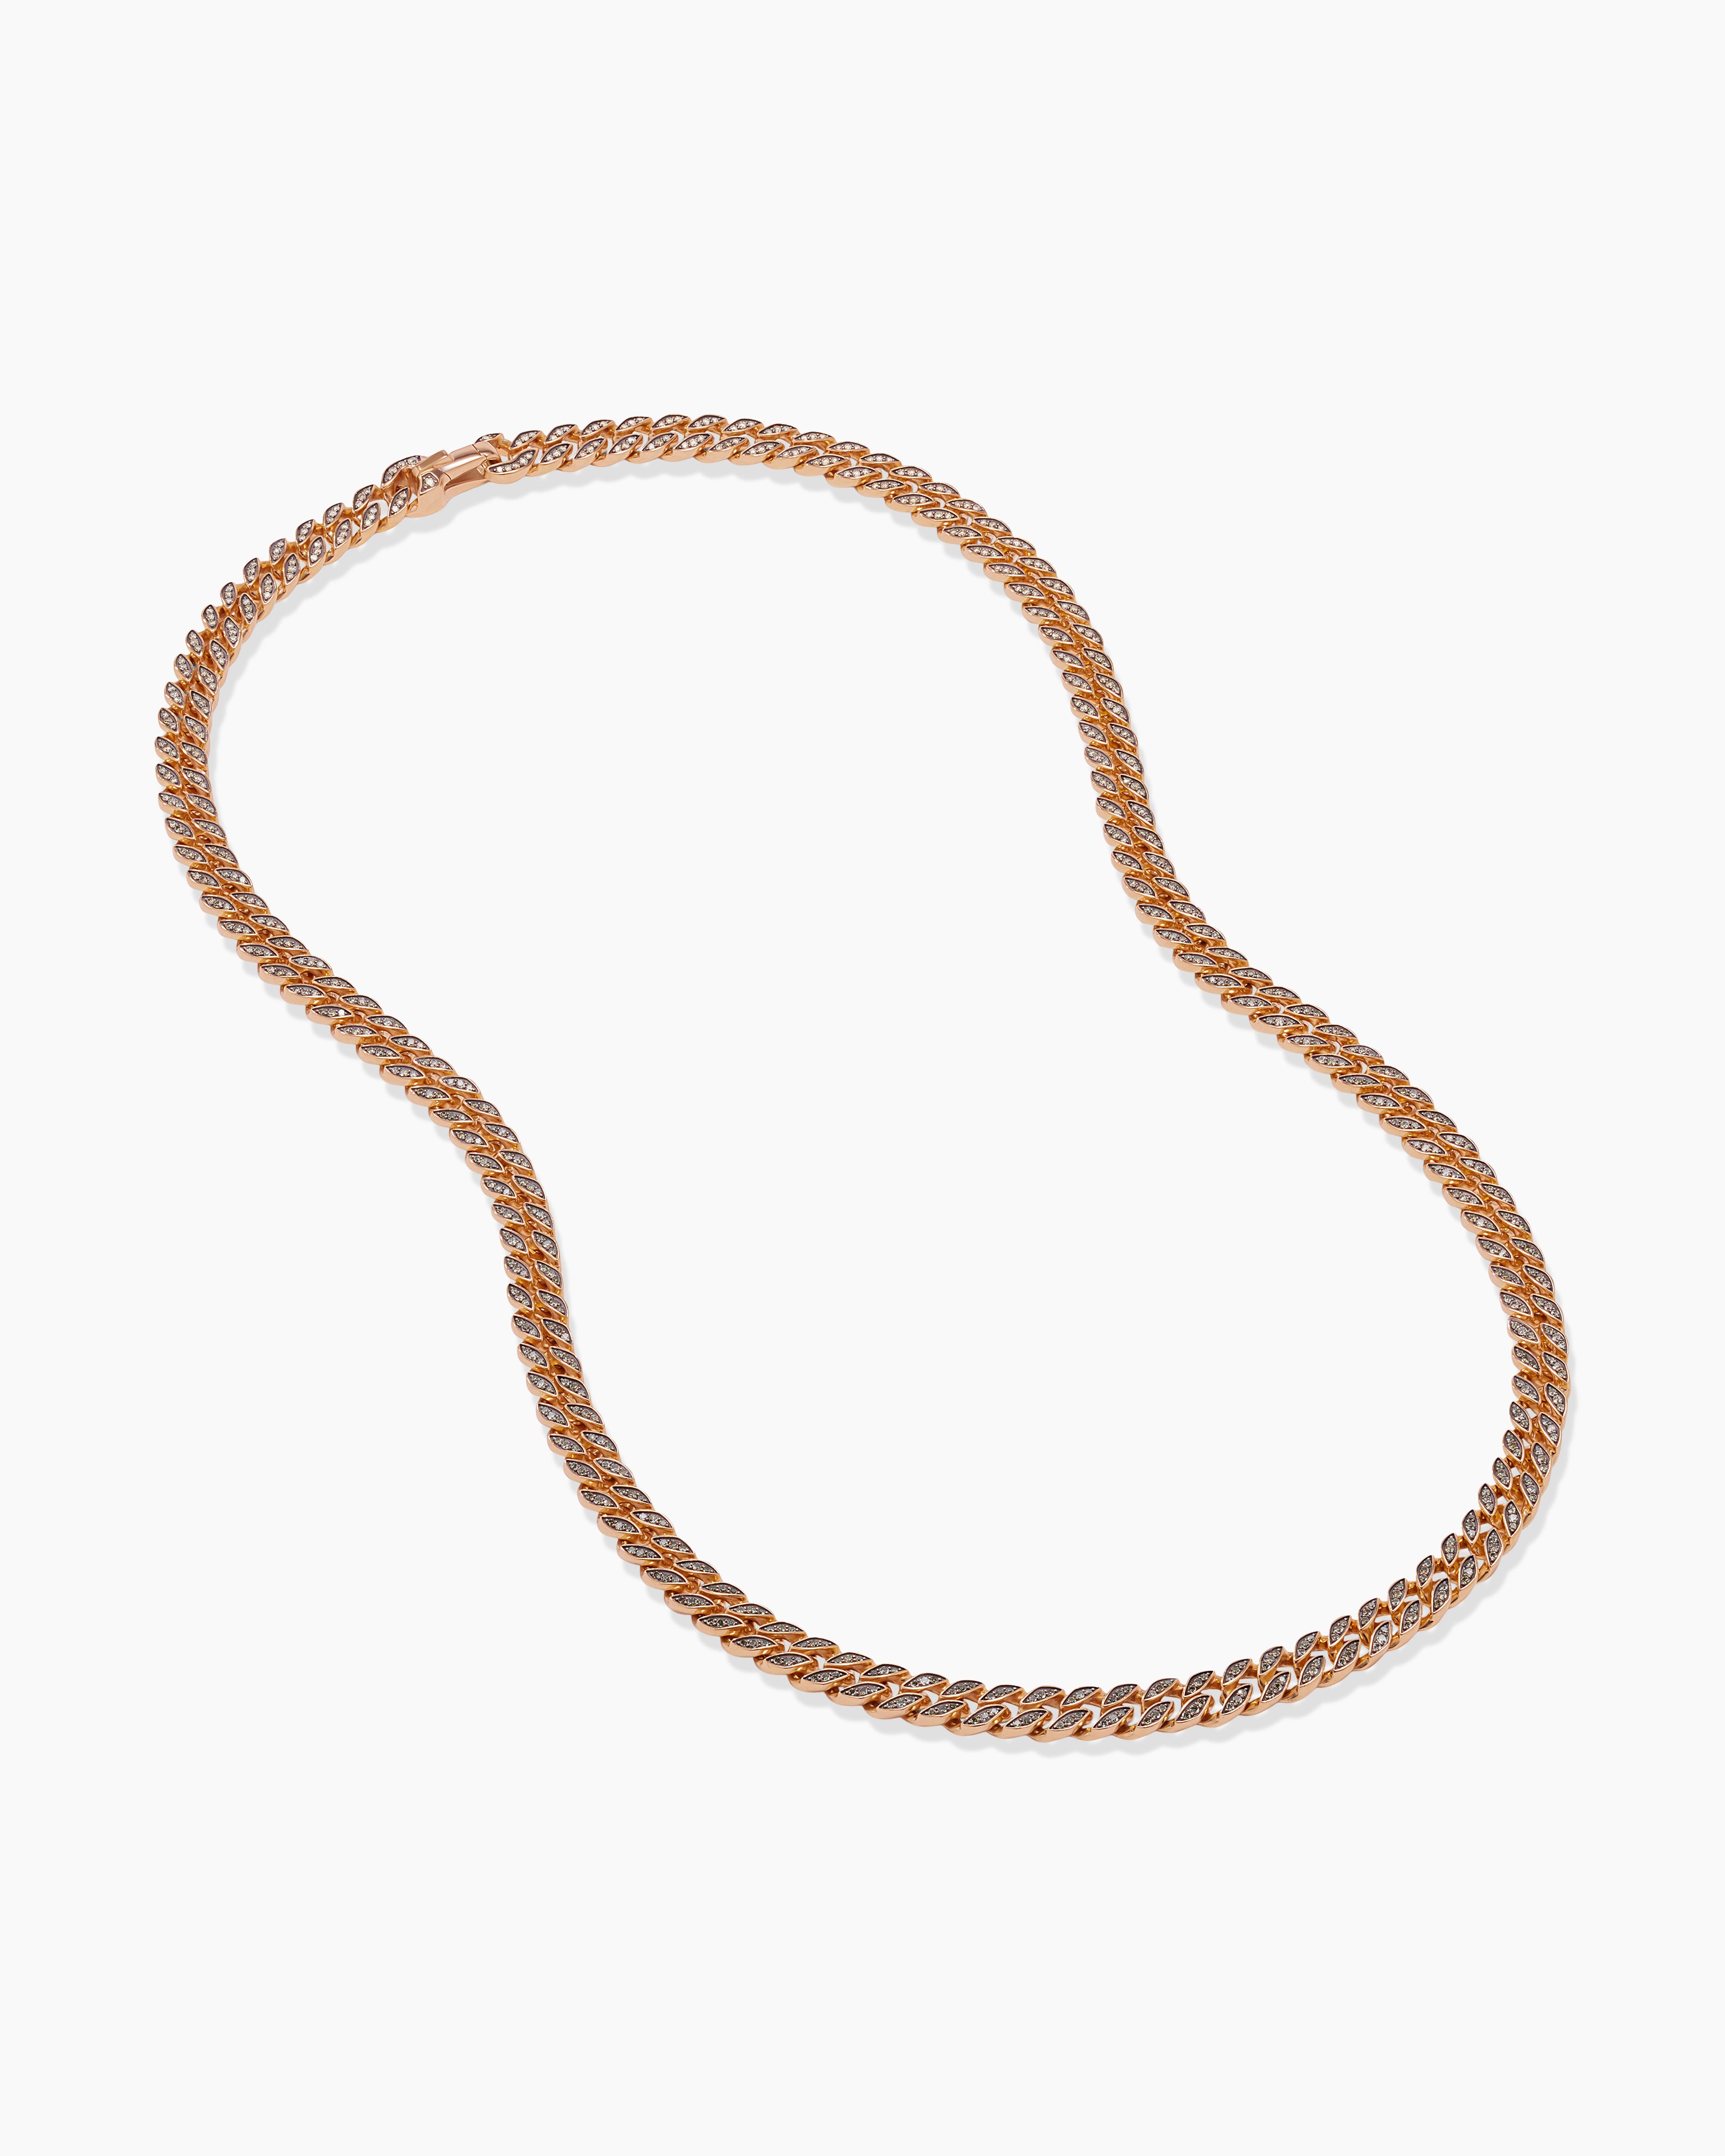 David Yurman Women's Curb Chain Bracelet in 18K Rose Gold - Rose Gold - Size Large